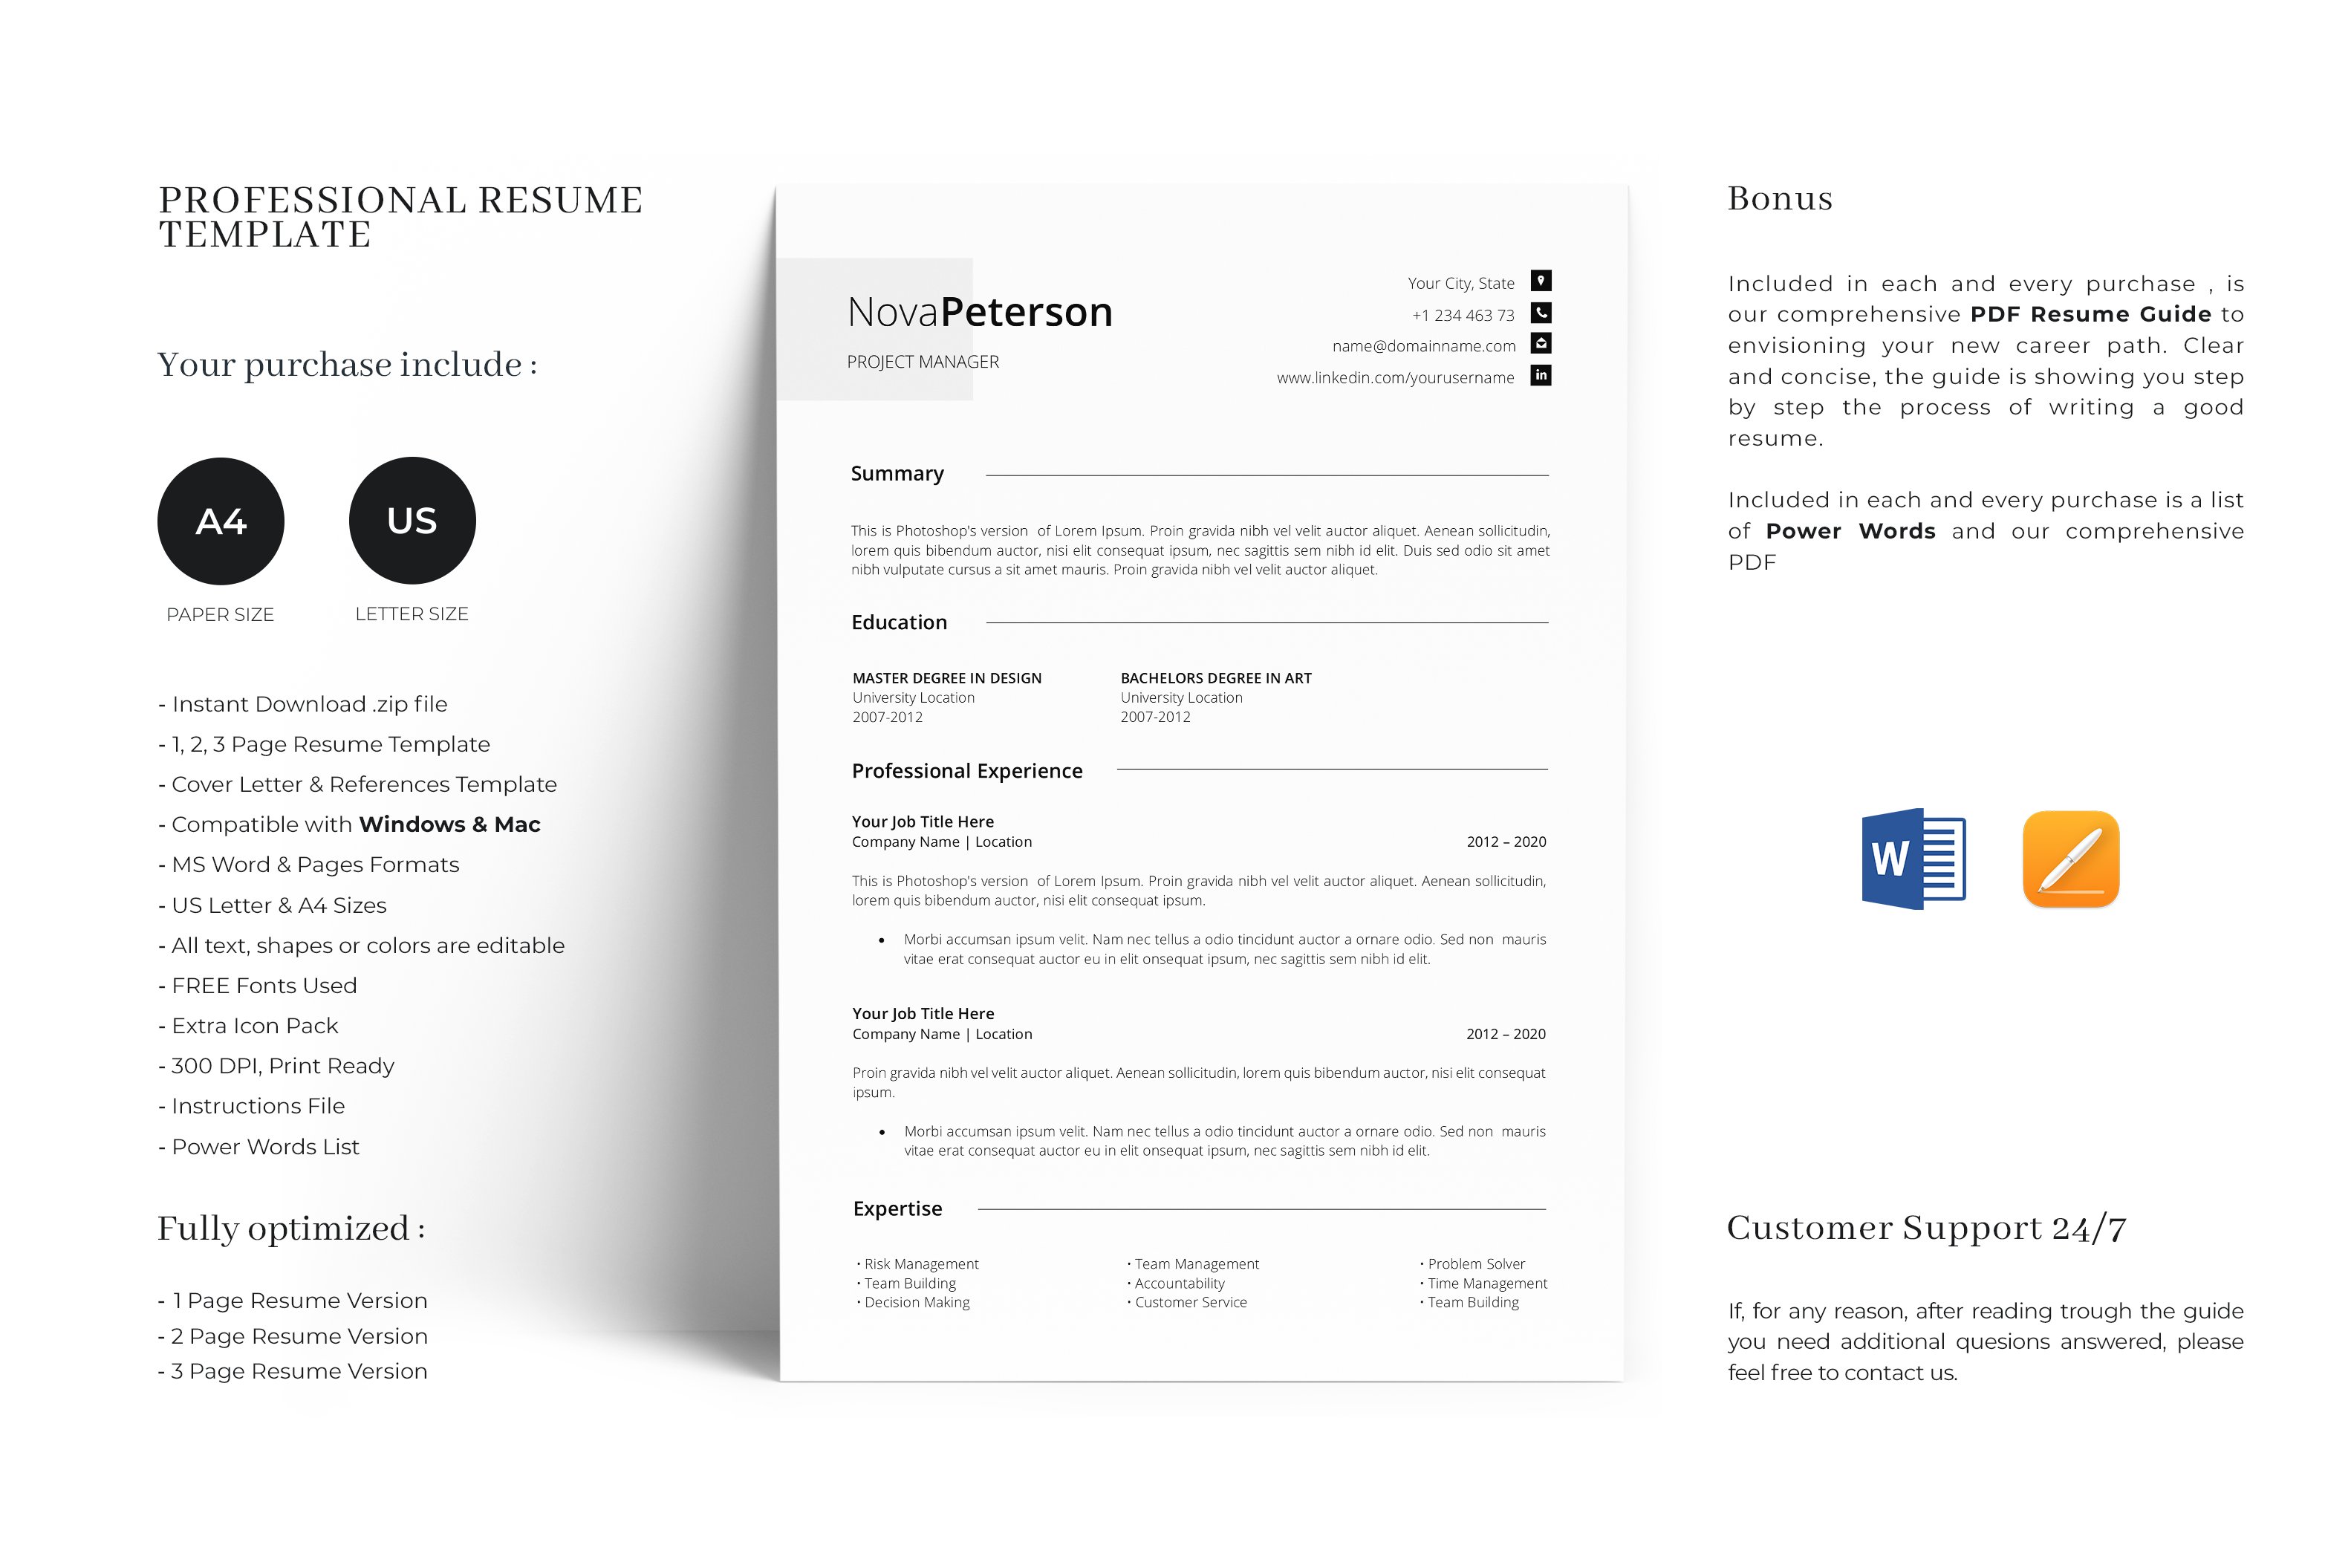 Minimal Resume Design Template cover image.